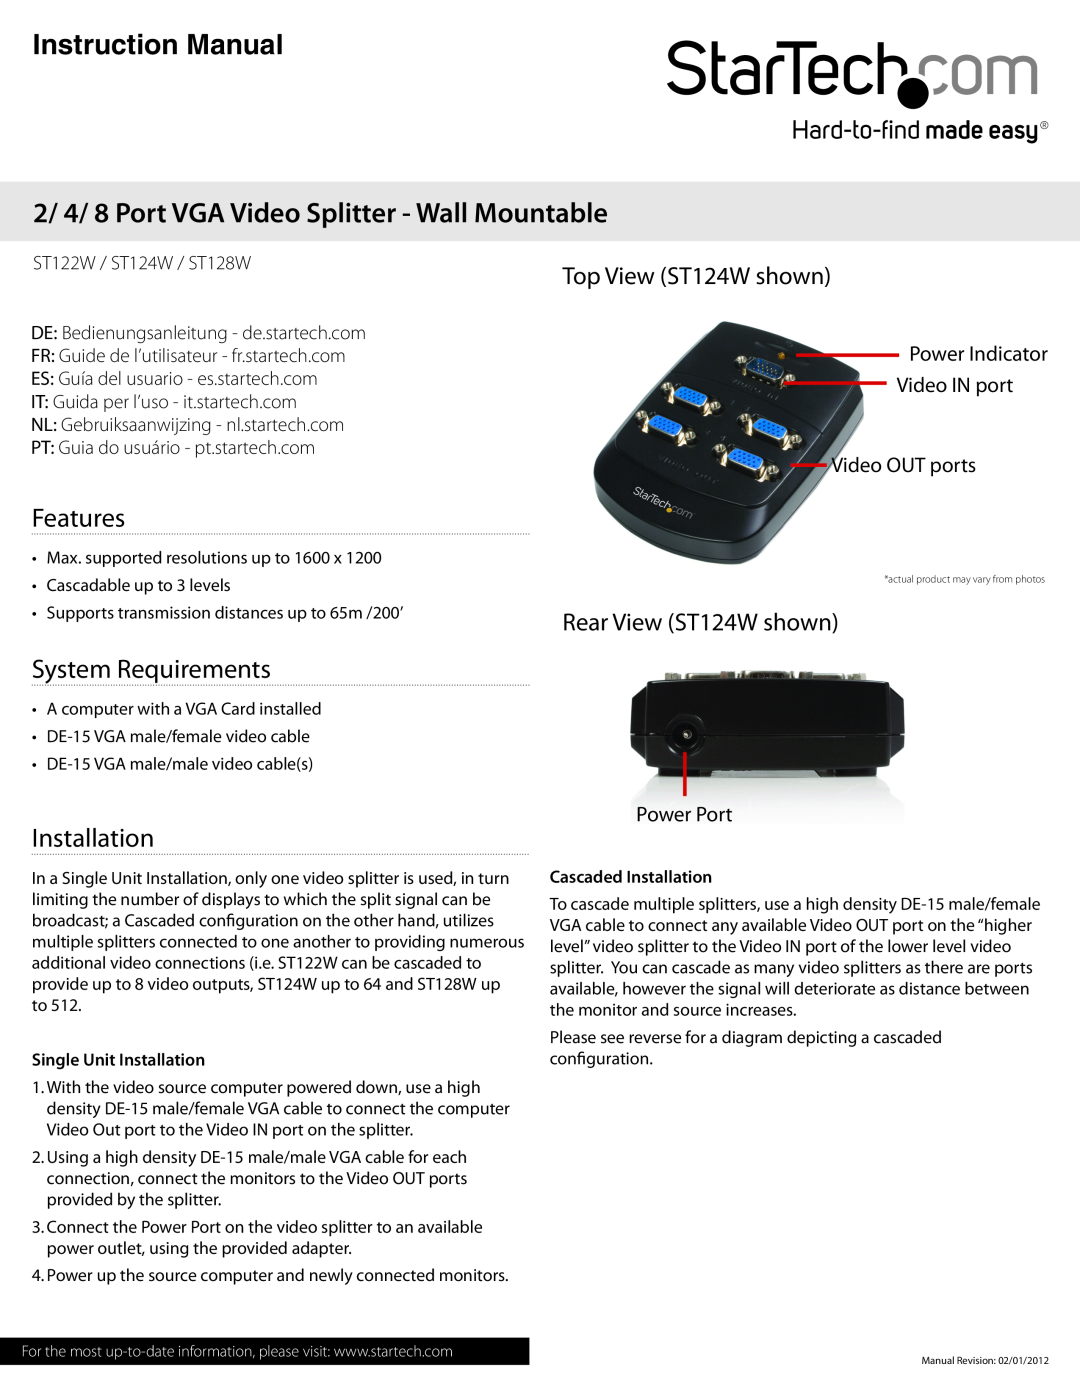 StarTech.com 2/4/8 port vga video splitter instruction manual Features, System Requirements, Installation, Power Port 